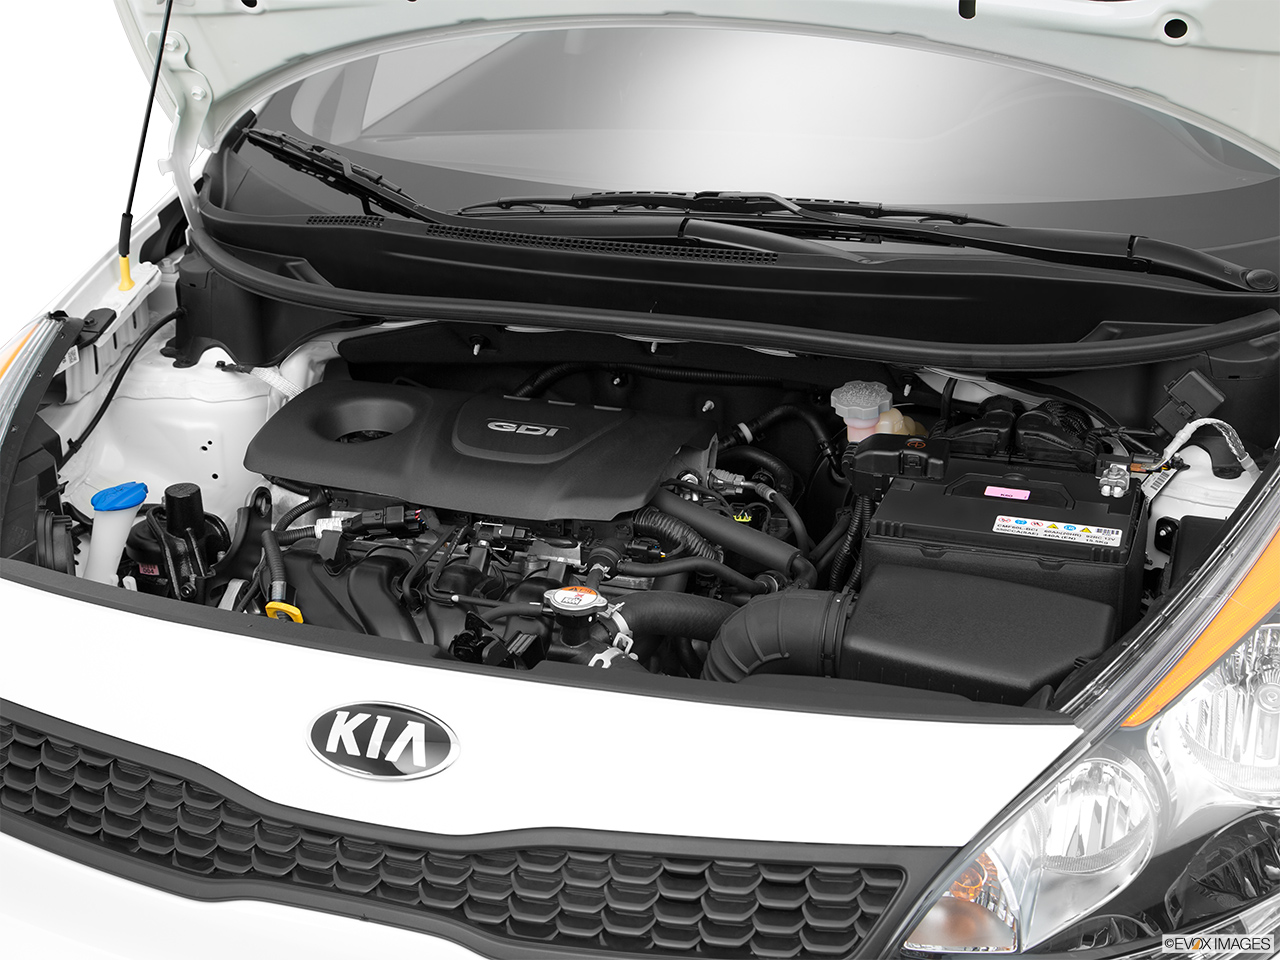 2016 Kia Rio 5-door LX Engine. 